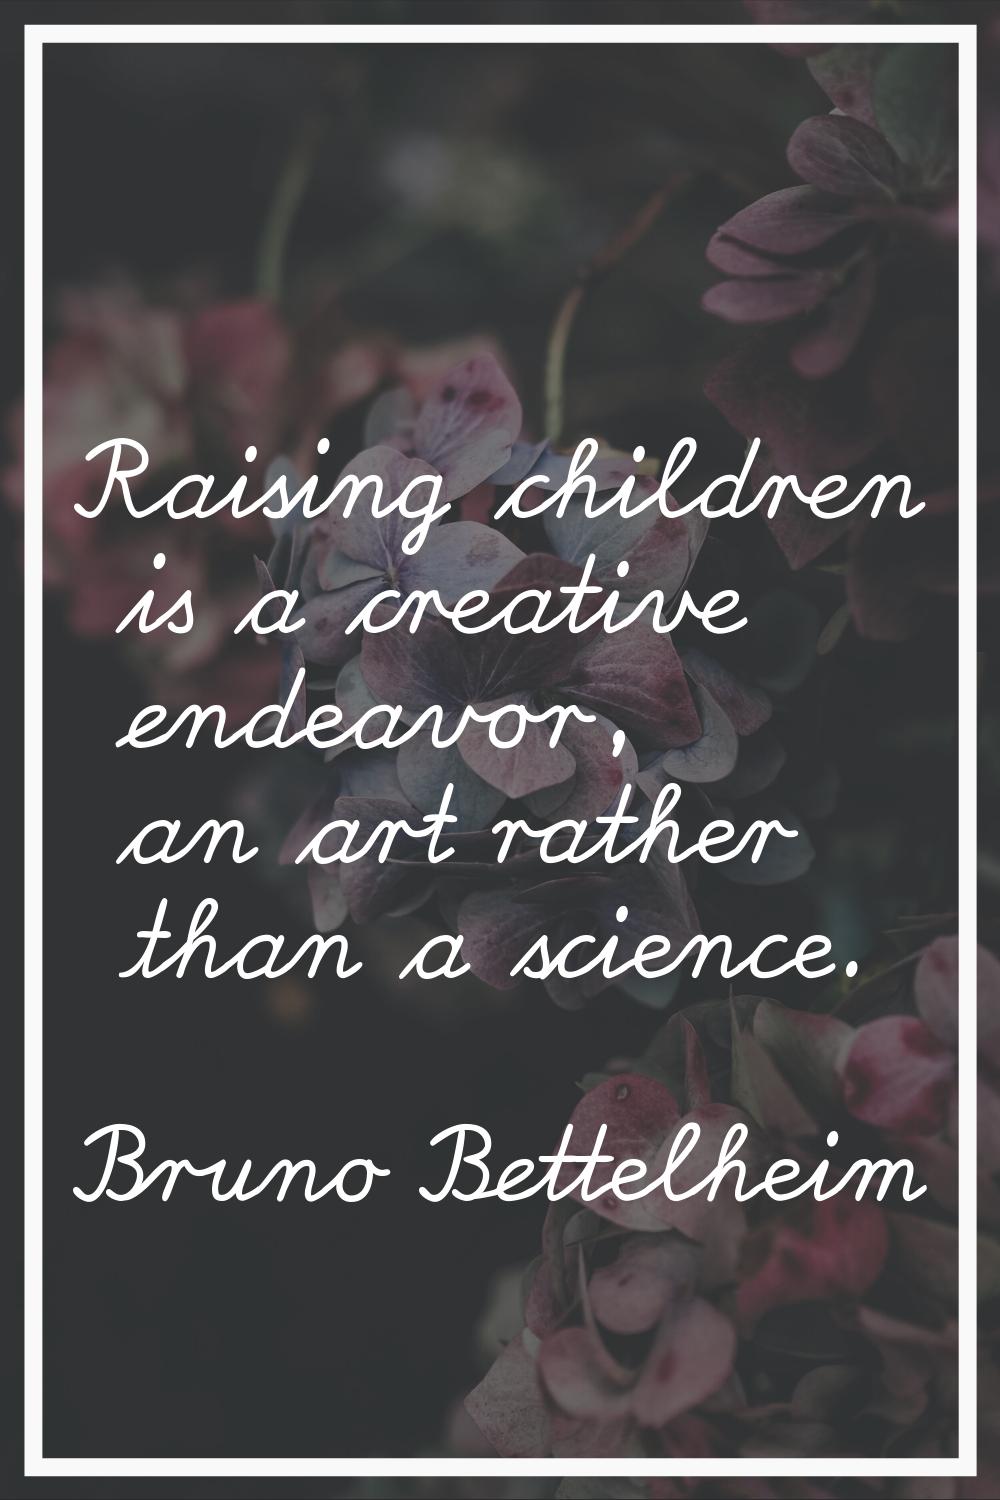 Raising children is a creative endeavor, an art rather than a science.